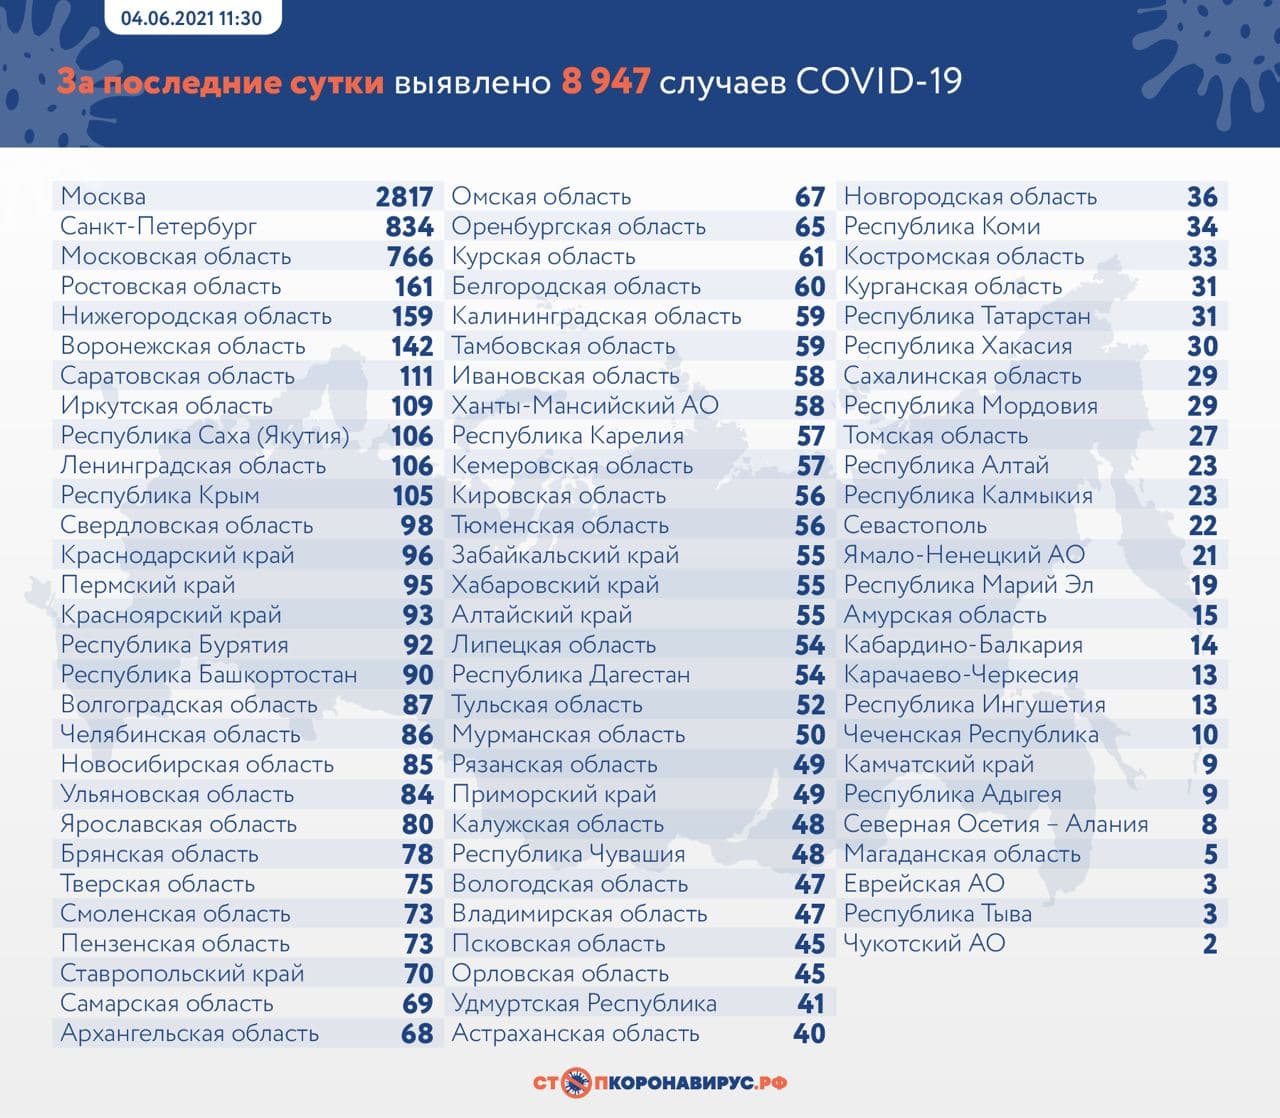 Оперативная статистика по коронавирусу в России на 4 июня